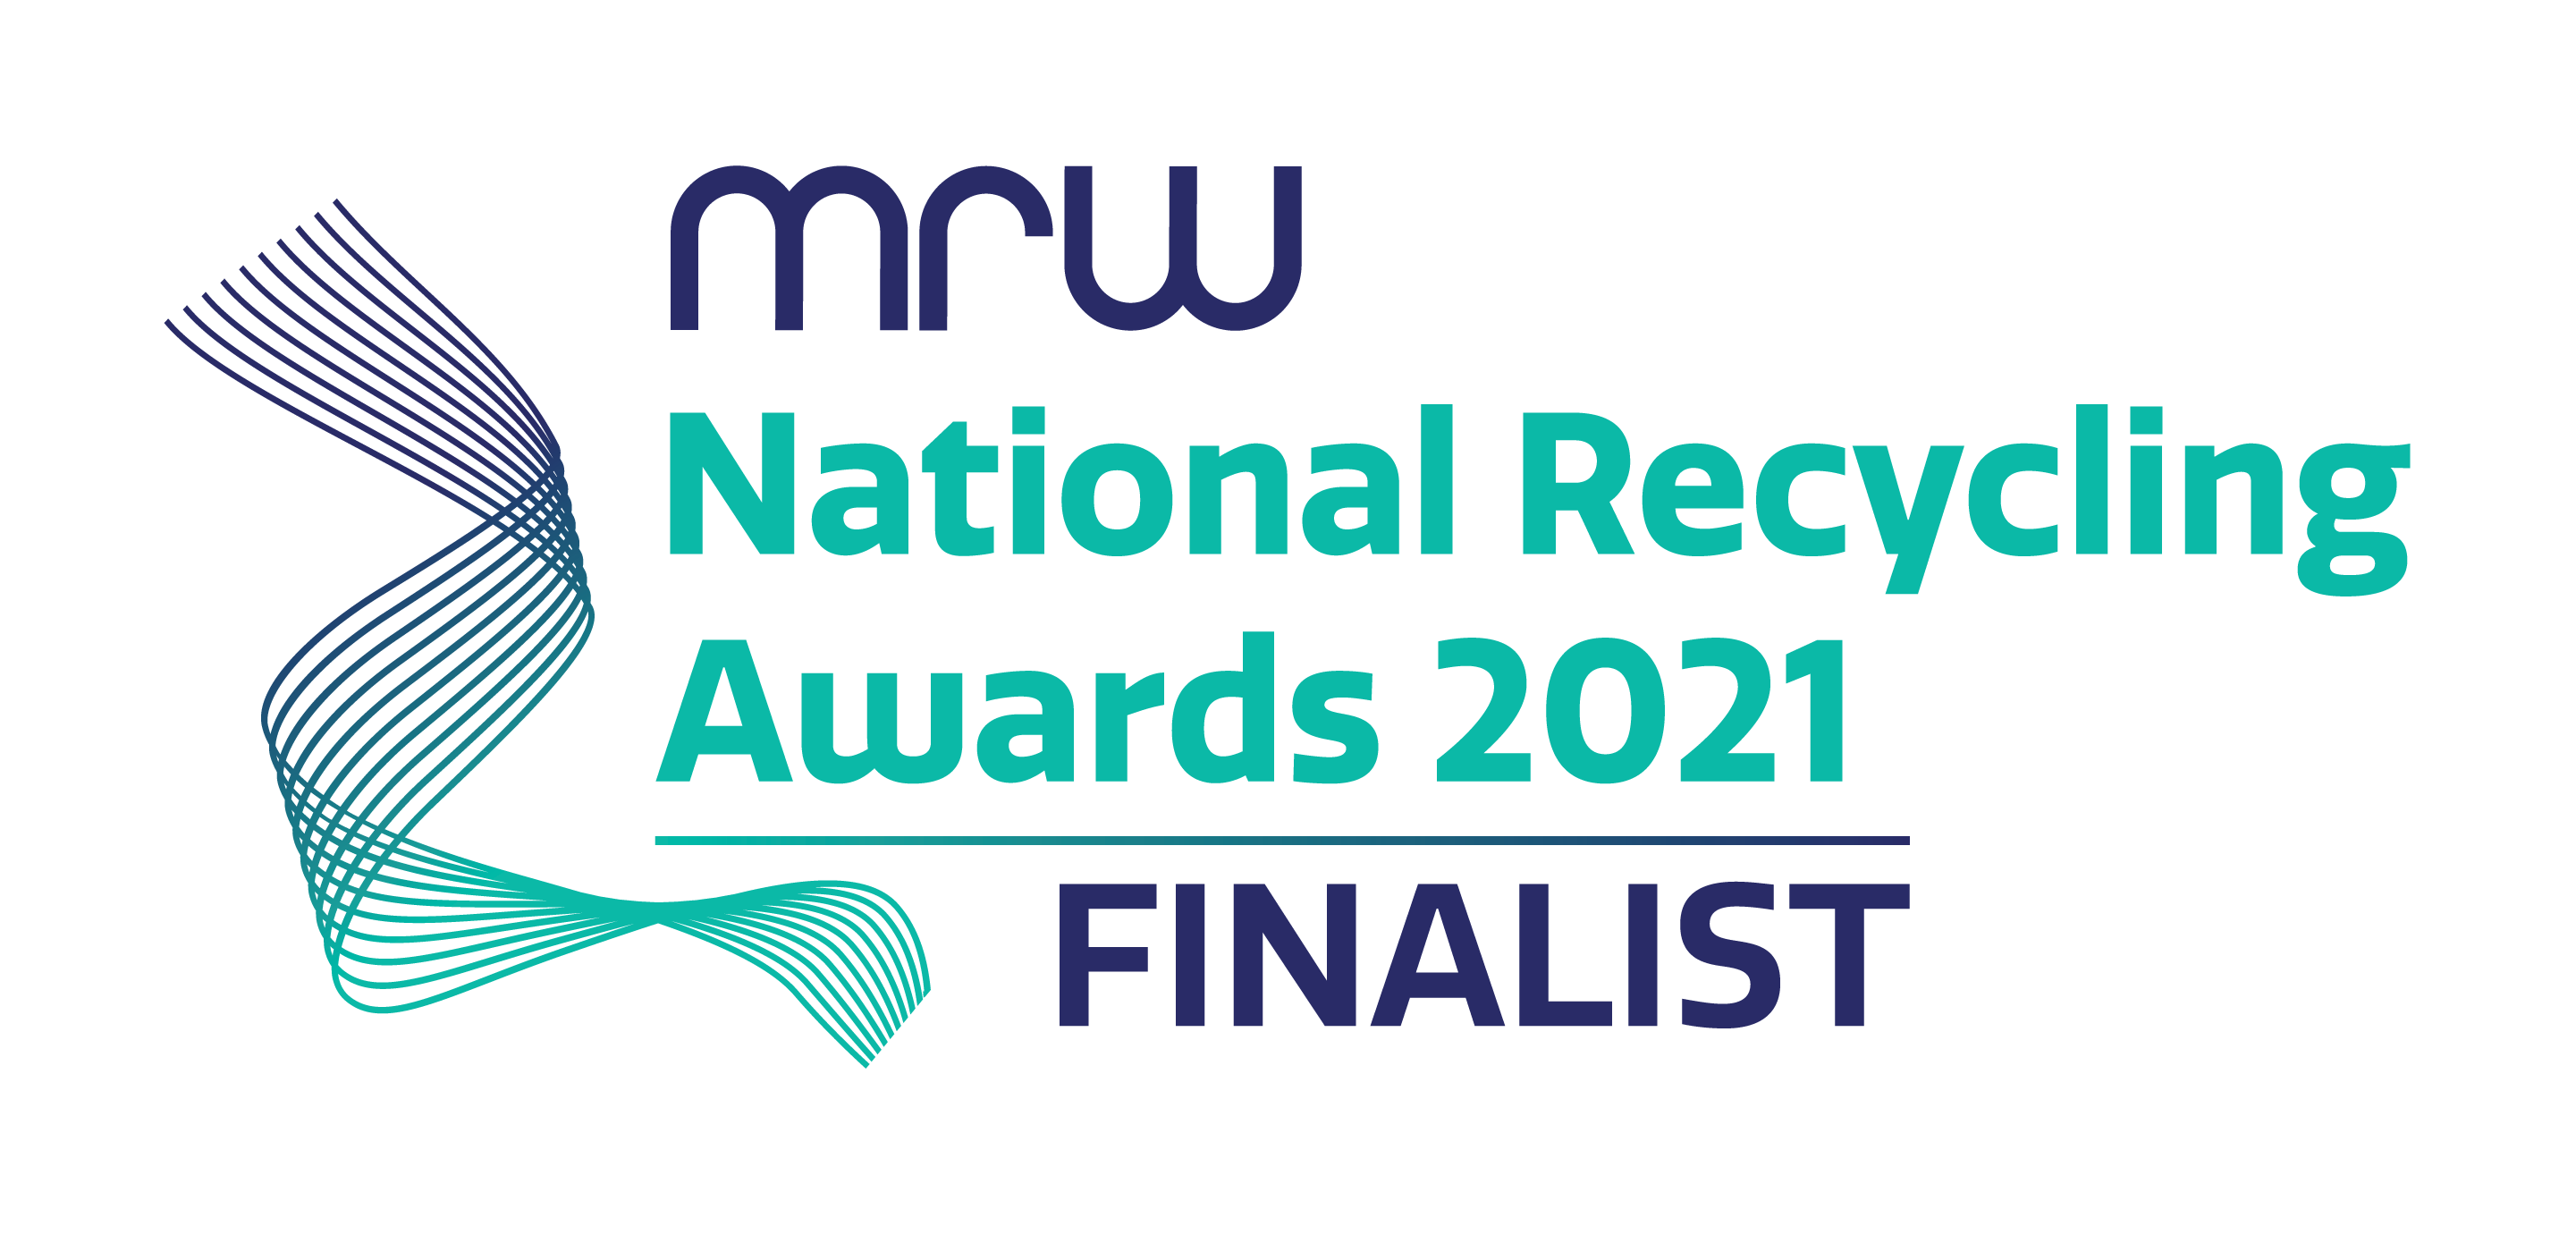 Recycling awards